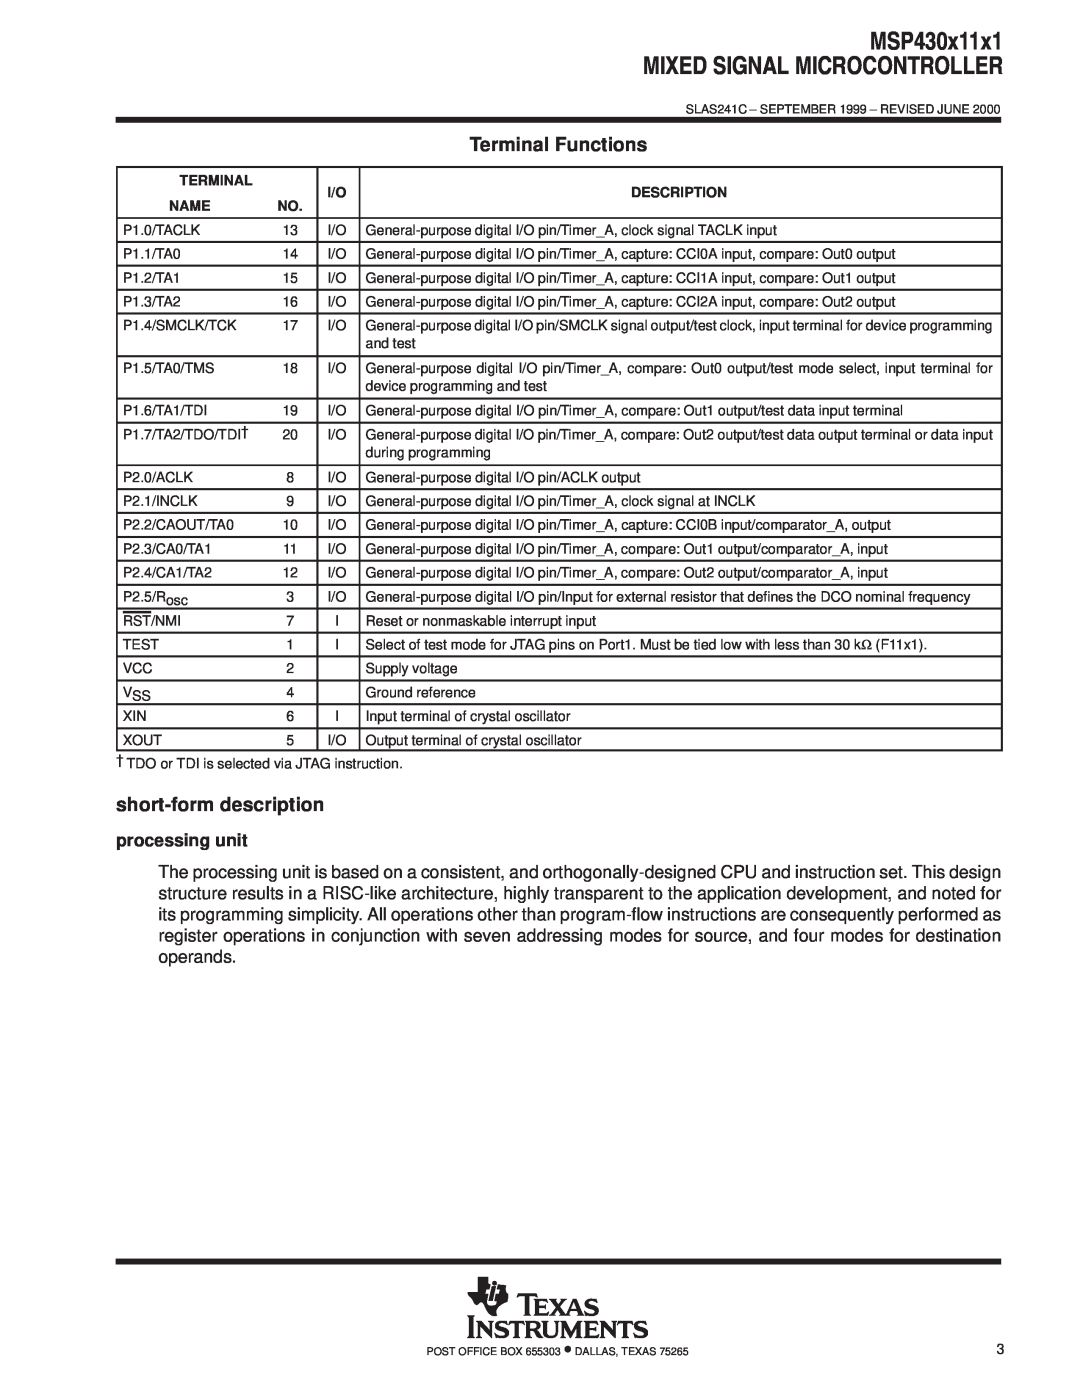 Texas Instruments MSP430x11x1 Terminal Functions, short-form description, processing unit, Mixed Signal Microcontroller 